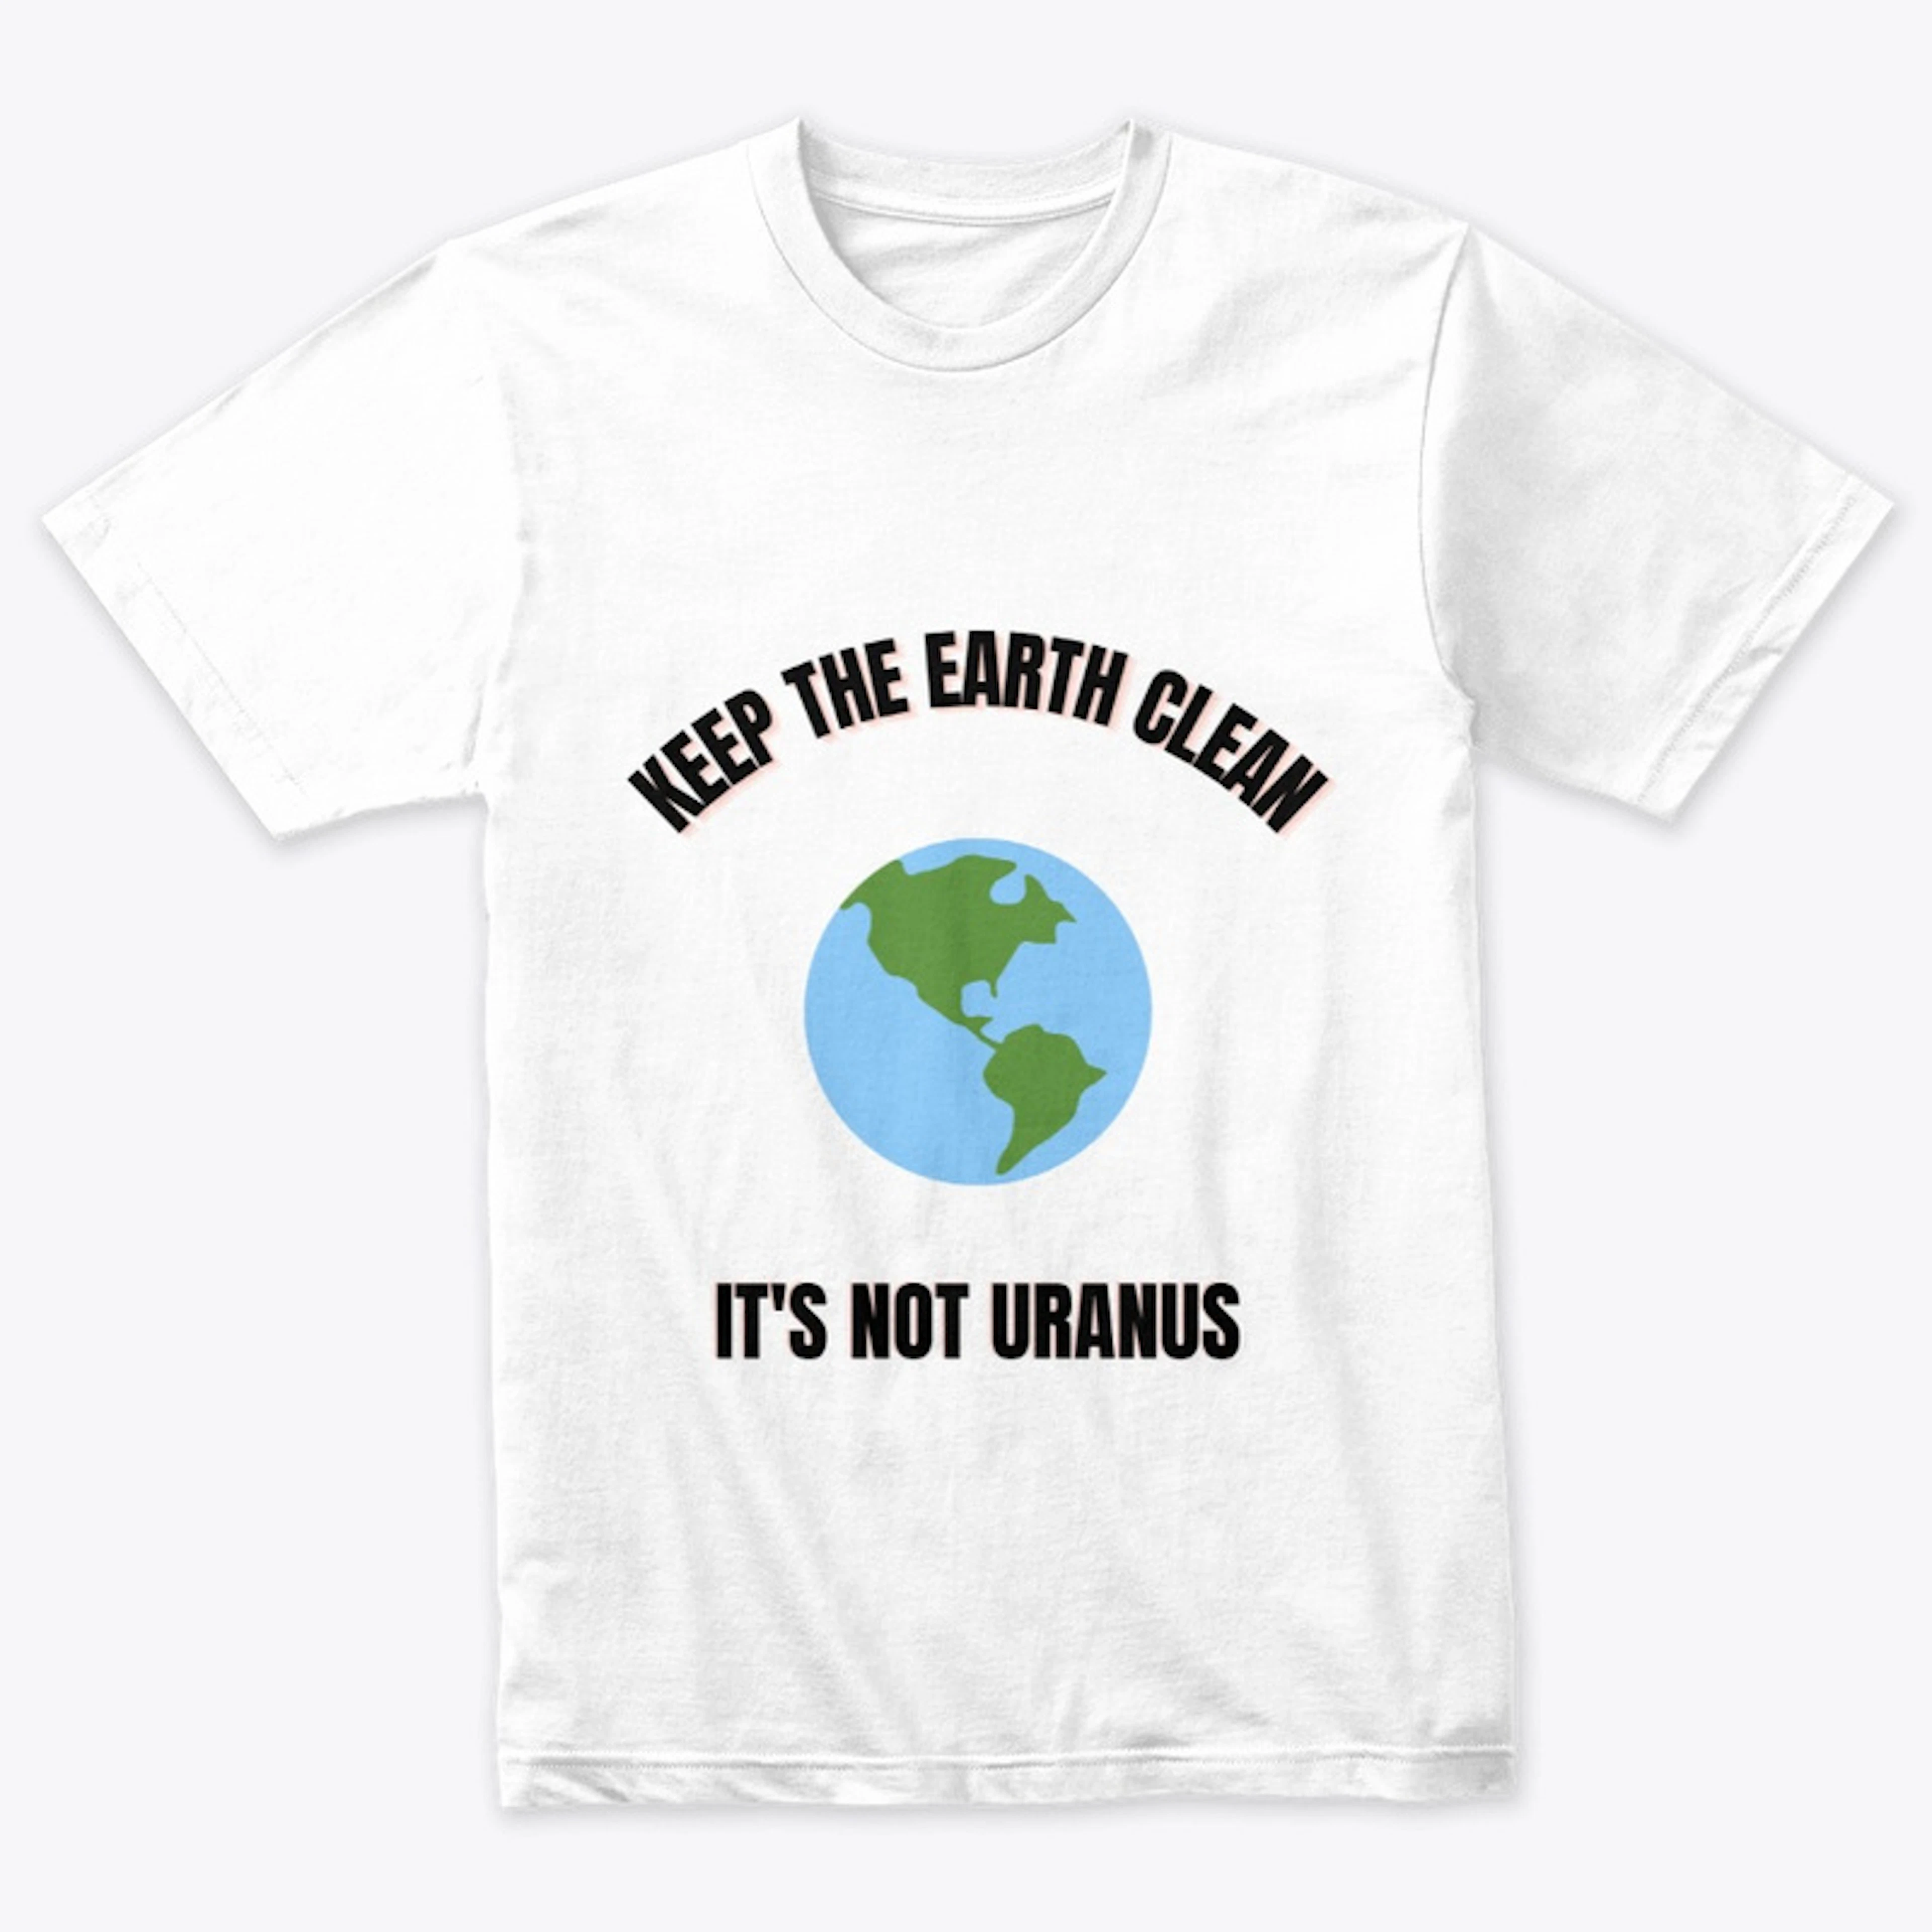 Keep The Earth Clean, It's not Uranus